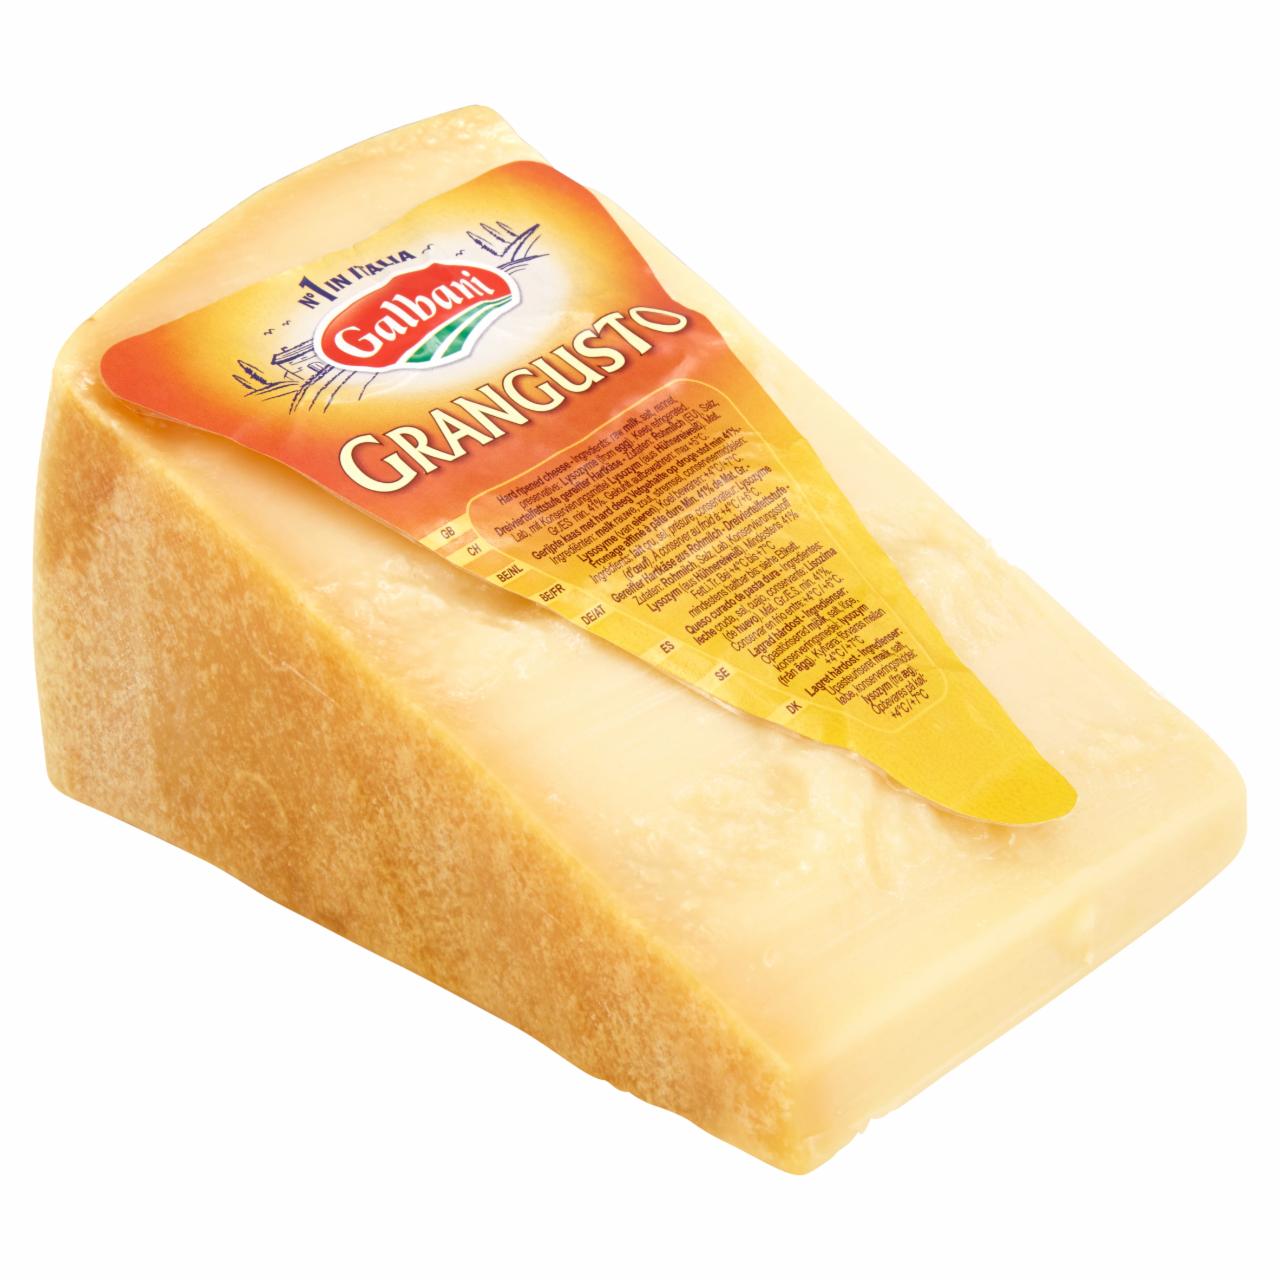 Képek - Galbani Grangusto sajt